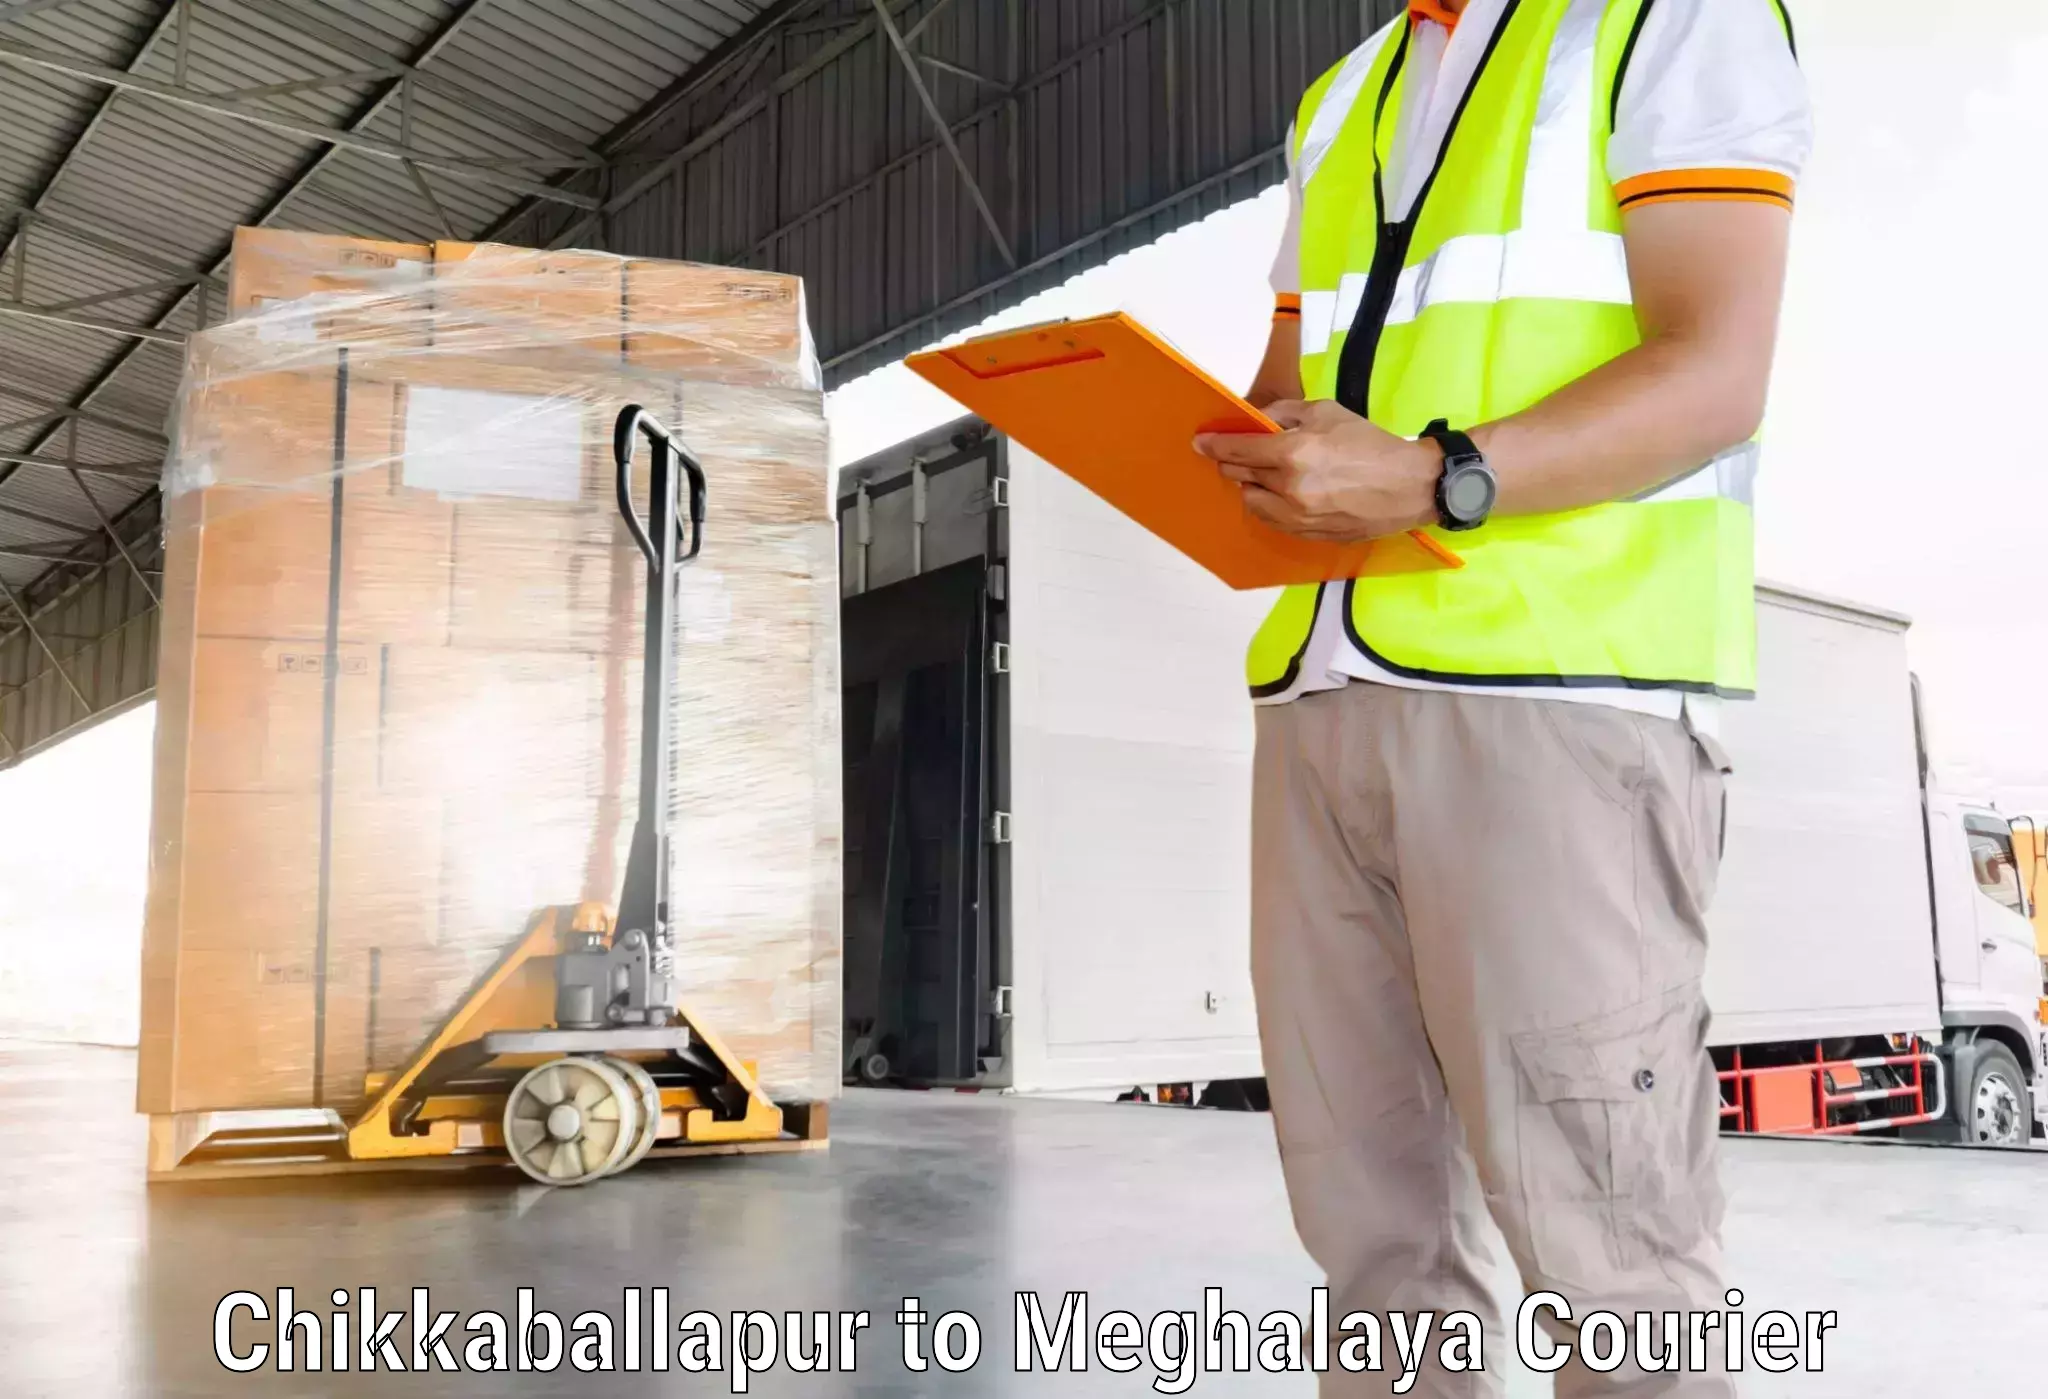 State-of-the-art courier technology Chikkaballapur to Shillong